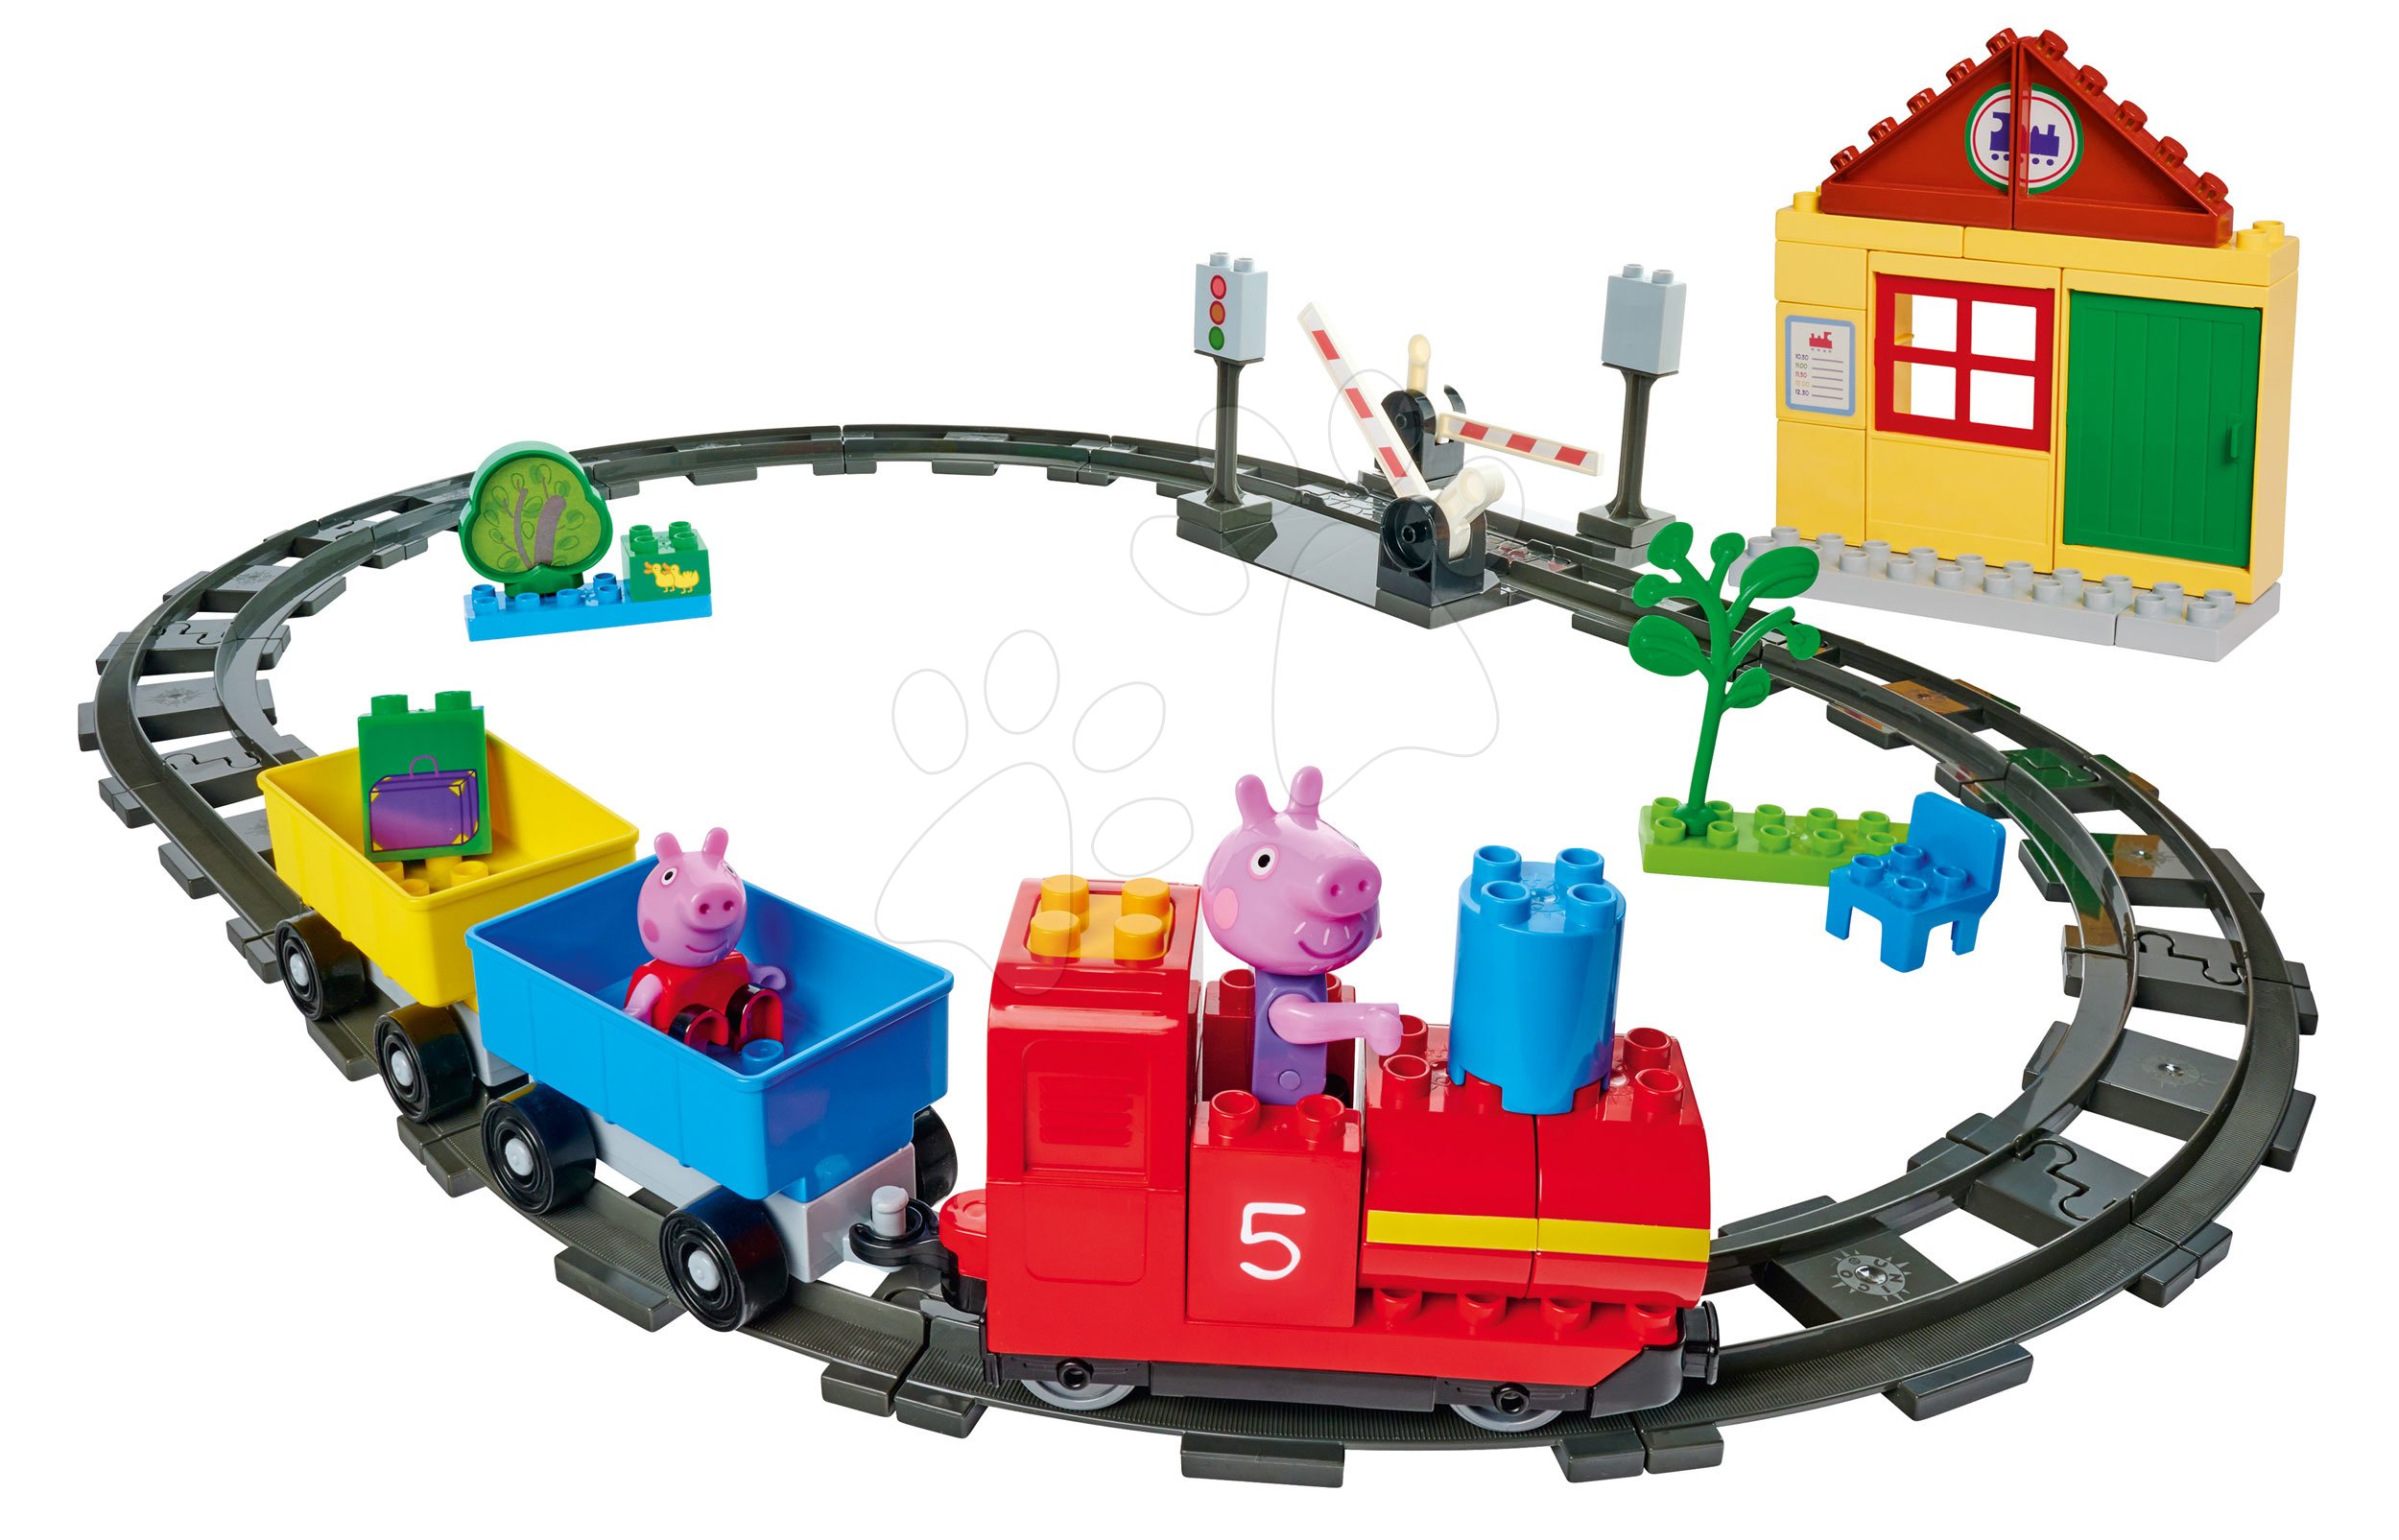 Stavebnice Peppa Pig Train Fun PlayBIG Bloxx železnice s vlakem a domečkem s 2 figurkami od 1,5-5 let